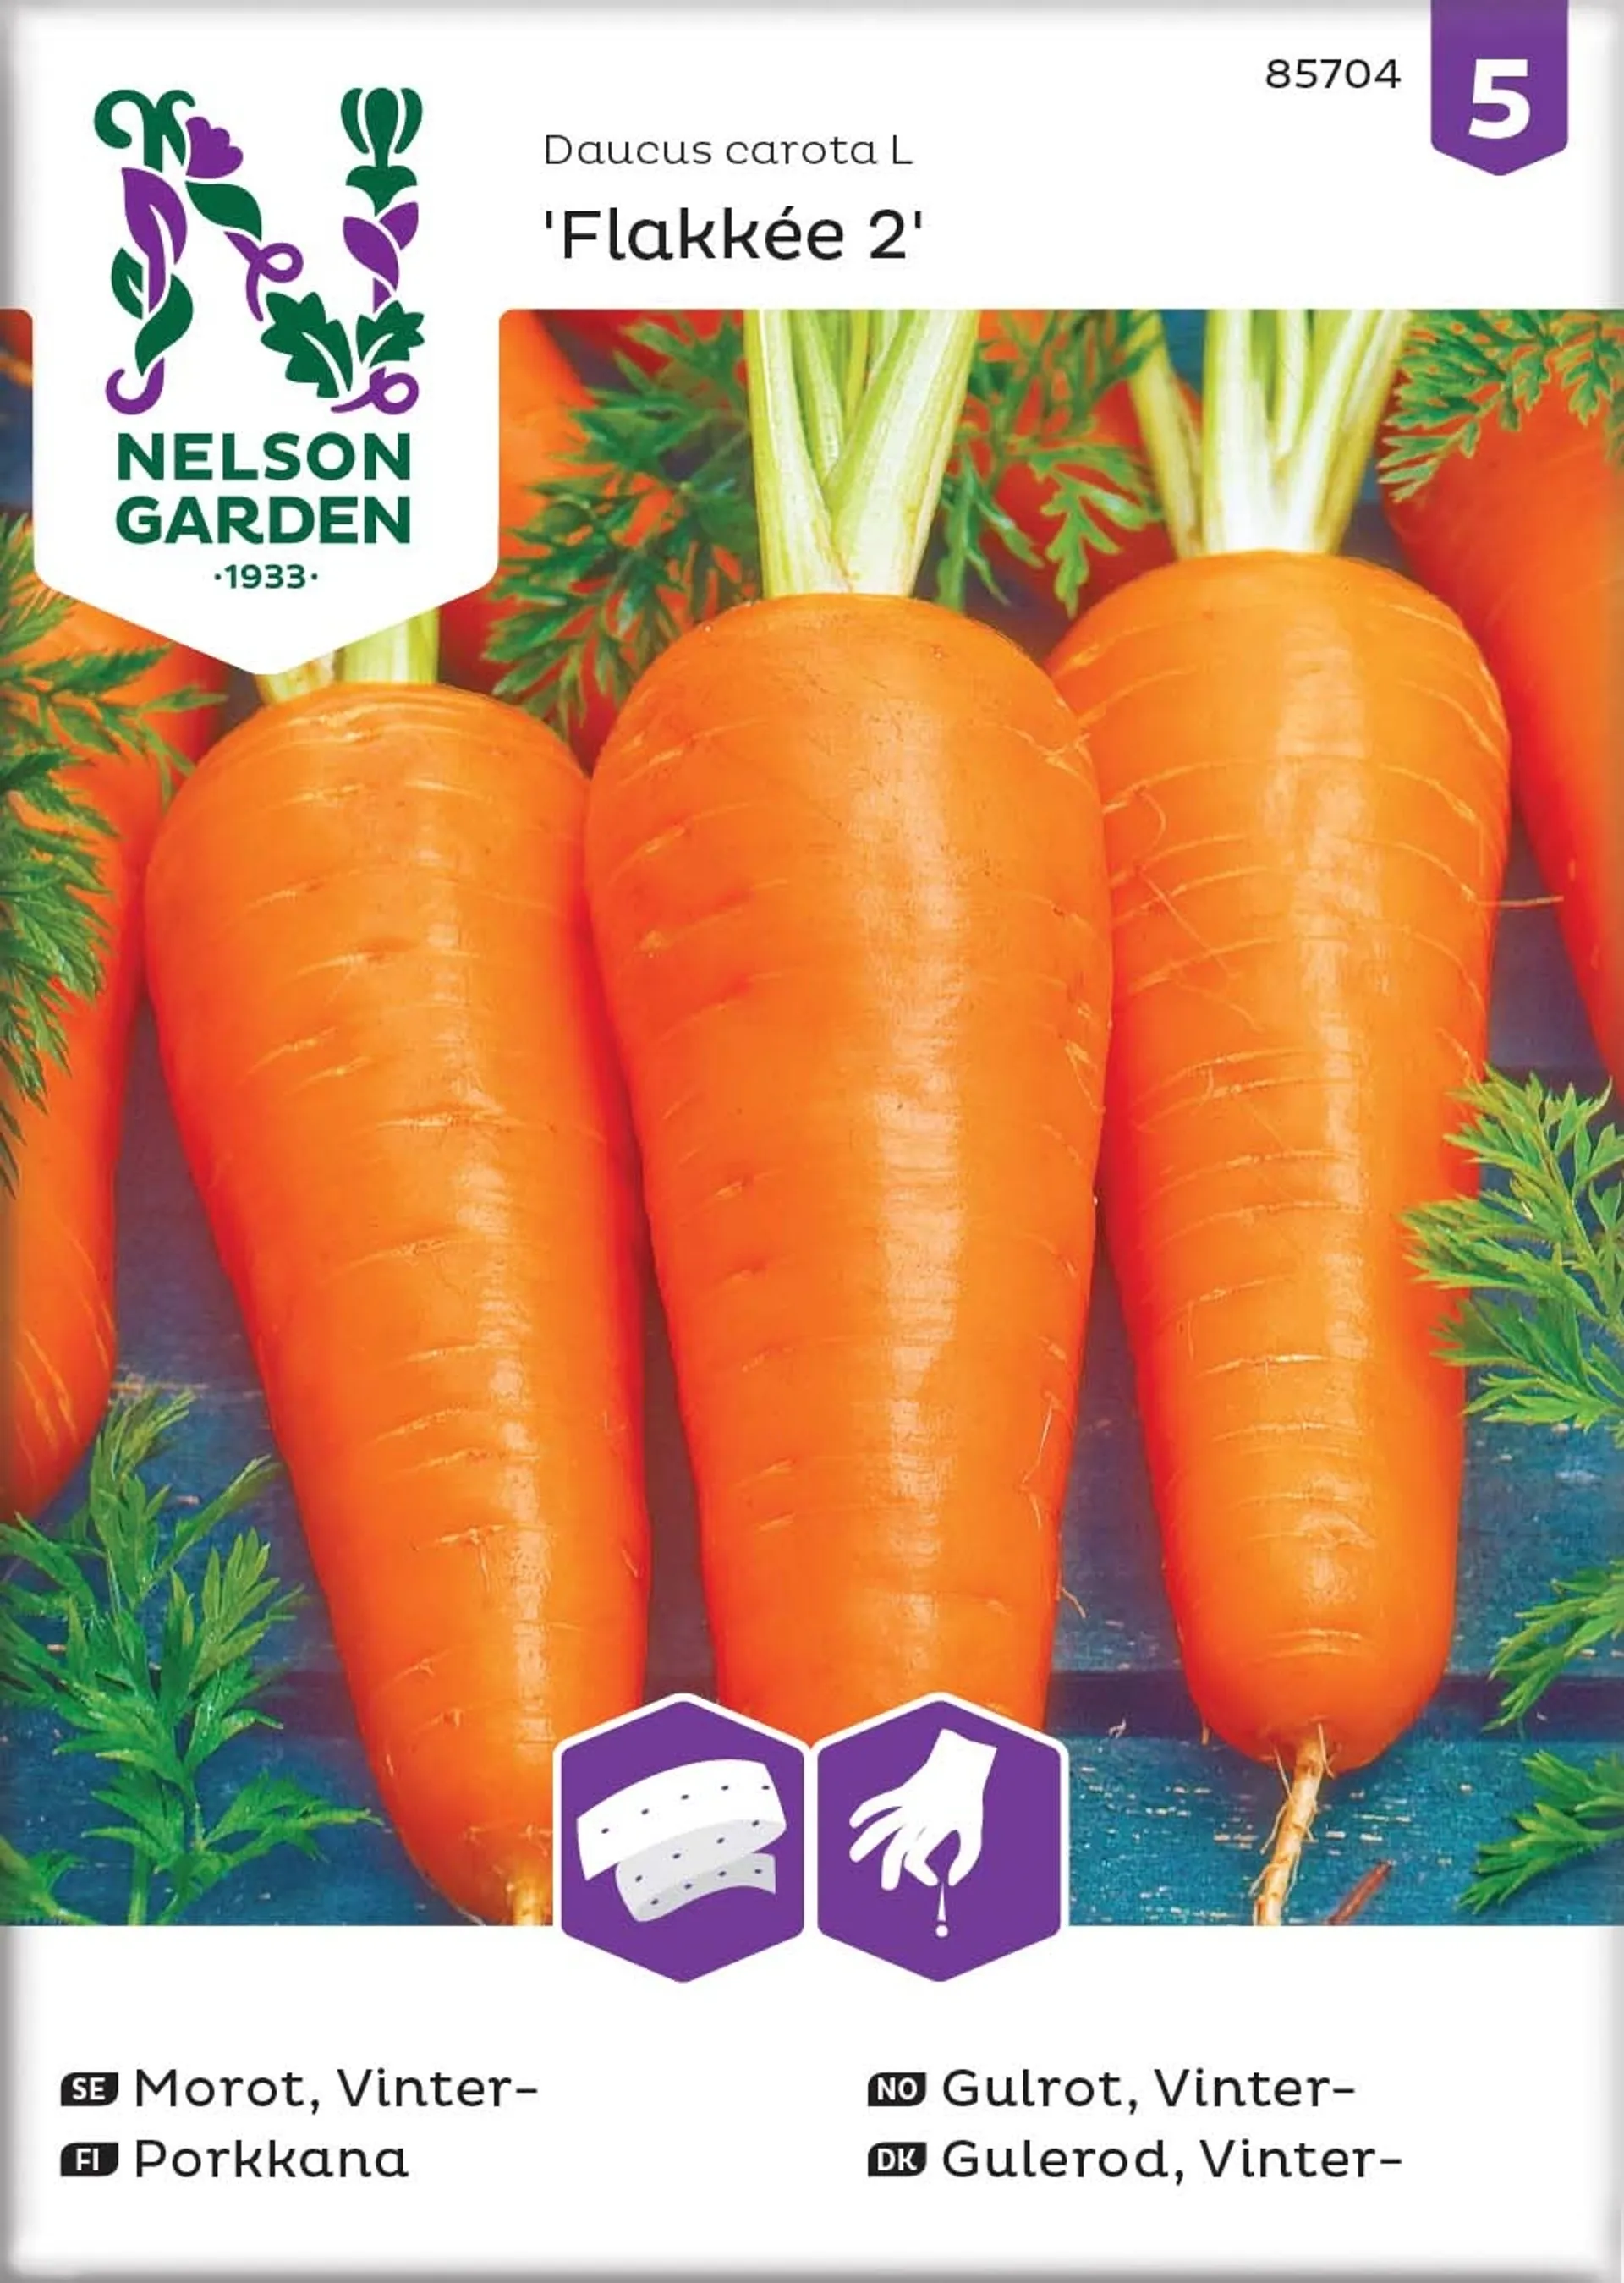 Nelson Garden Siemen Porkkana, Flakkée 2, kylvönauha